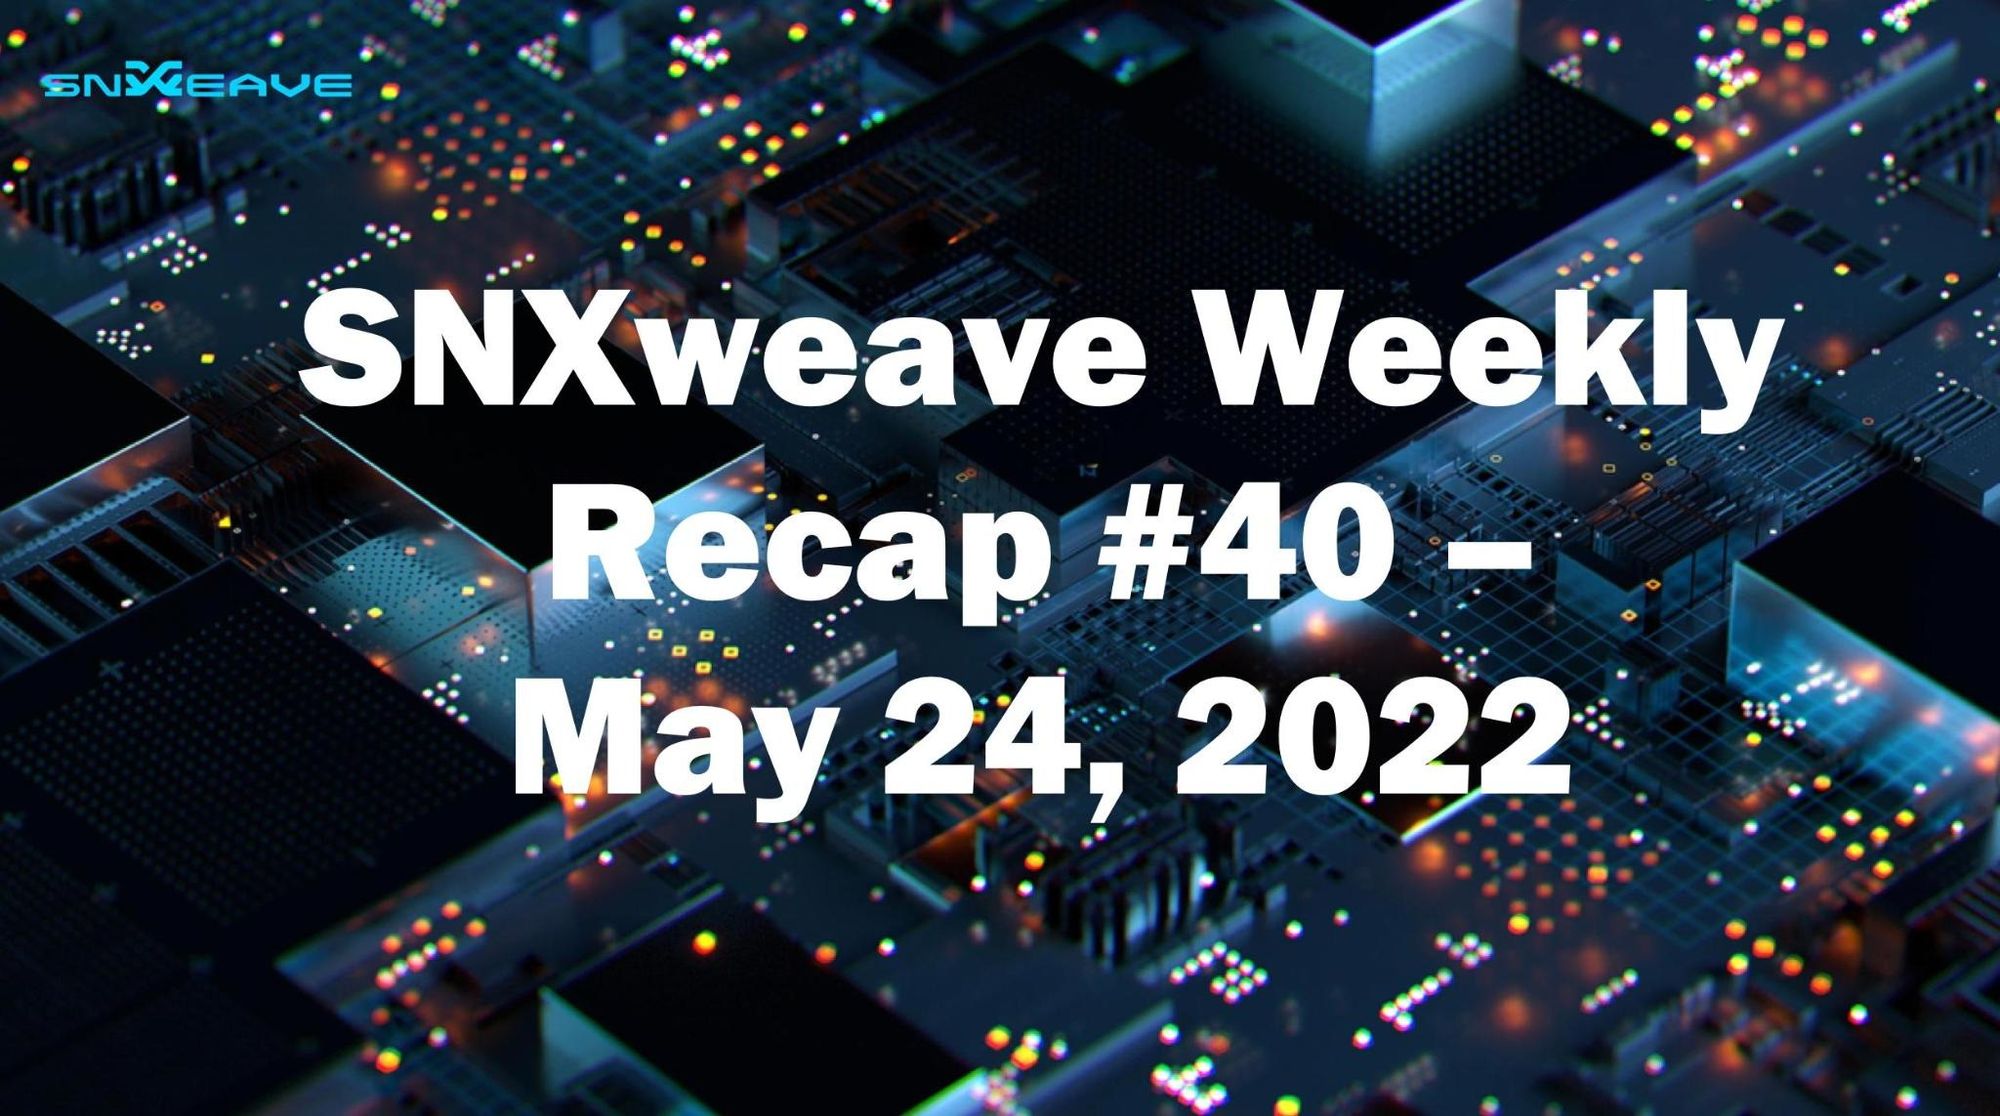 SNXweave Weekly Recap 40